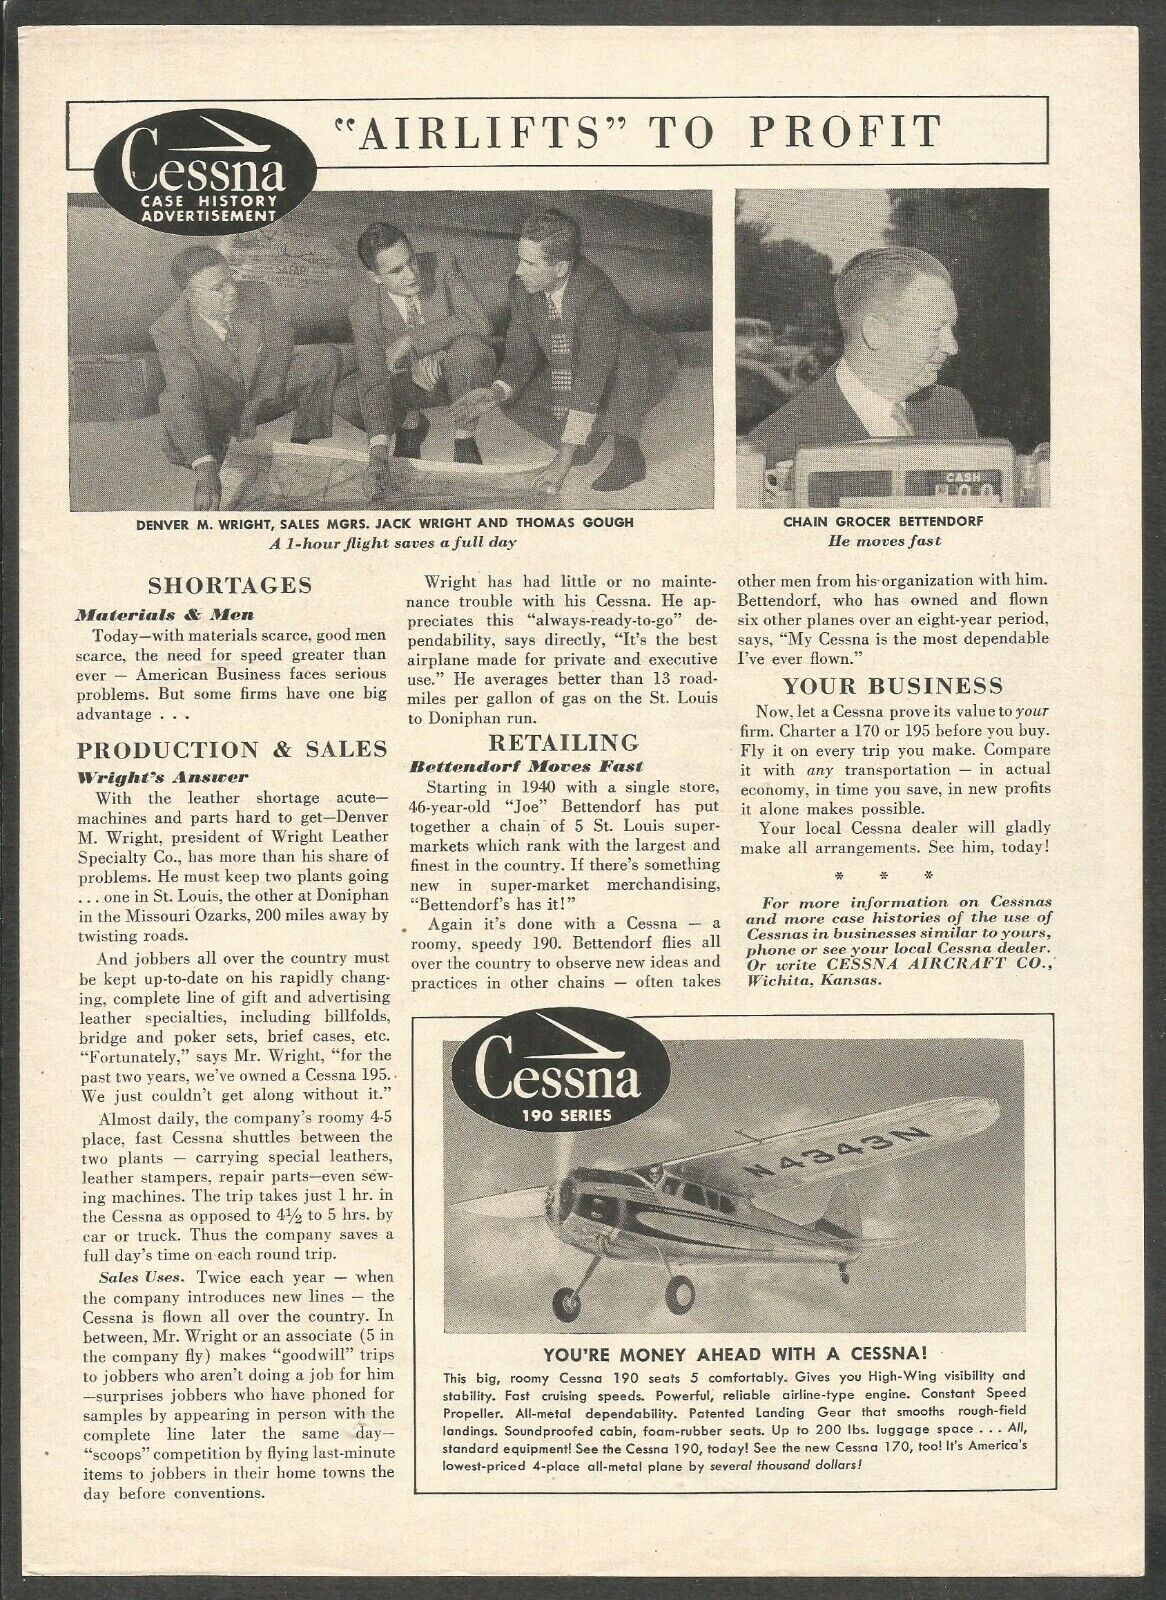 CESSNA 190 SERIES - Case History Advertisement - 1952 Vintage Print Ad